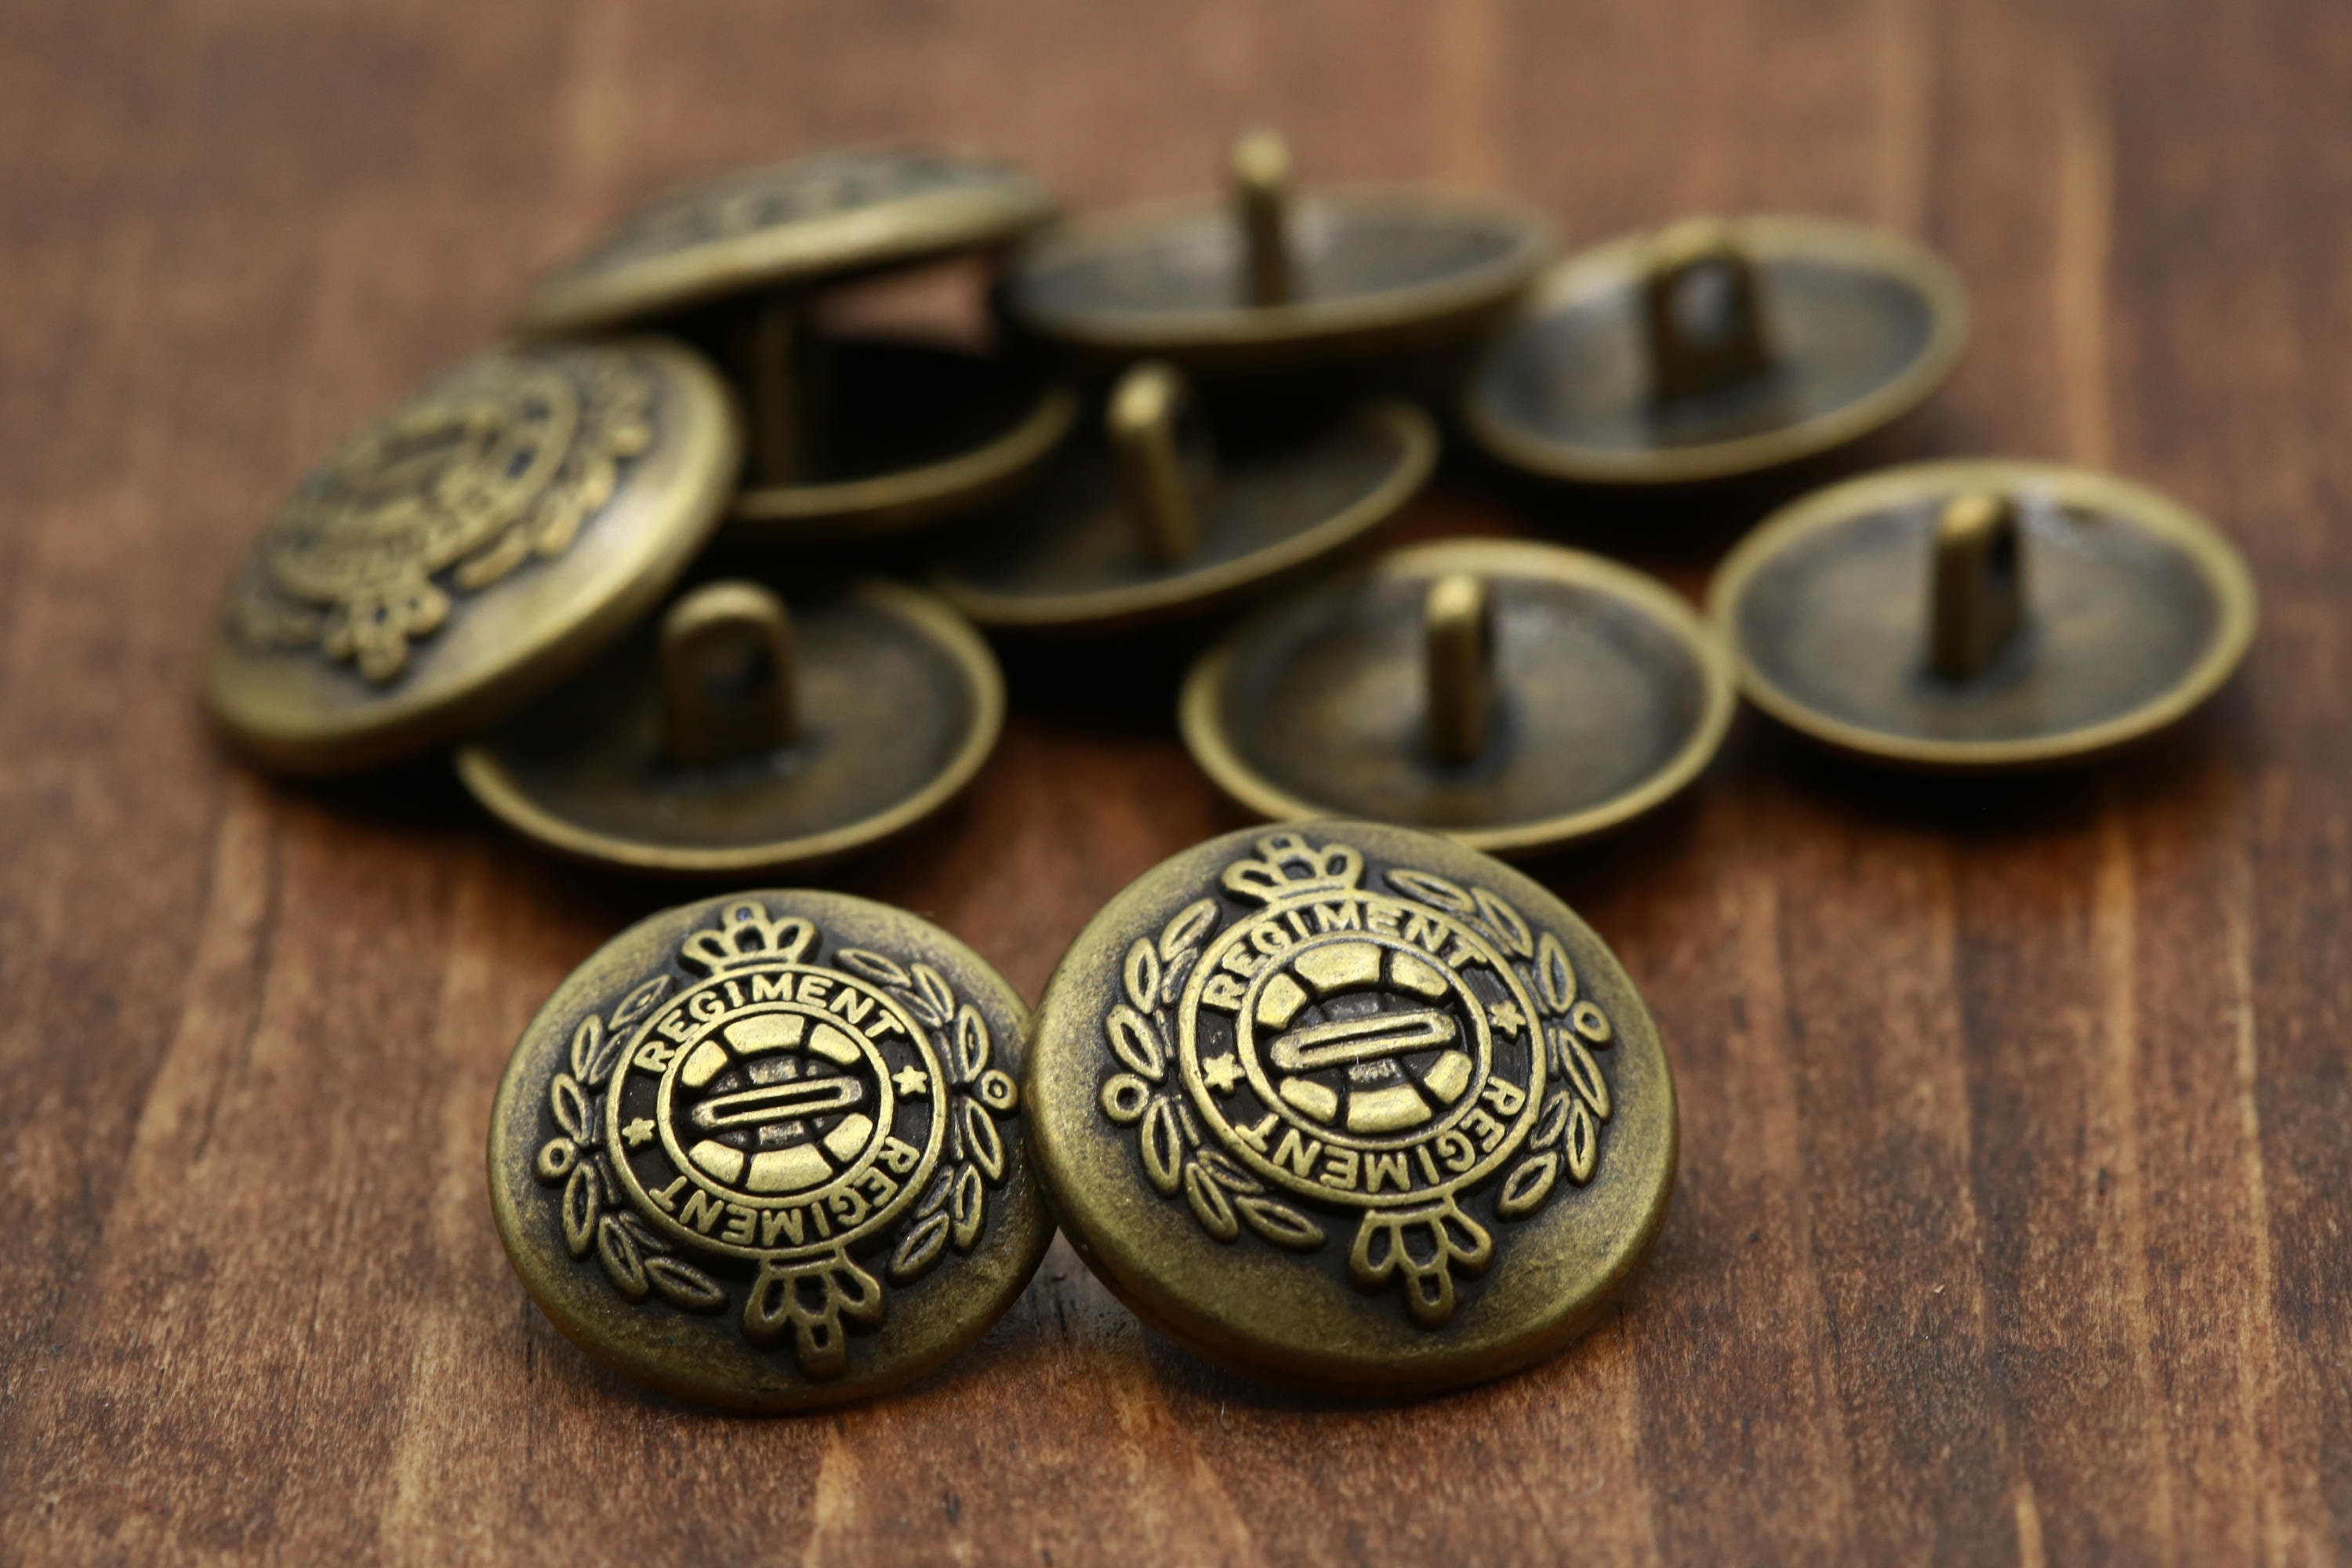 Vintage Brass Button at Rs 600/kilogram